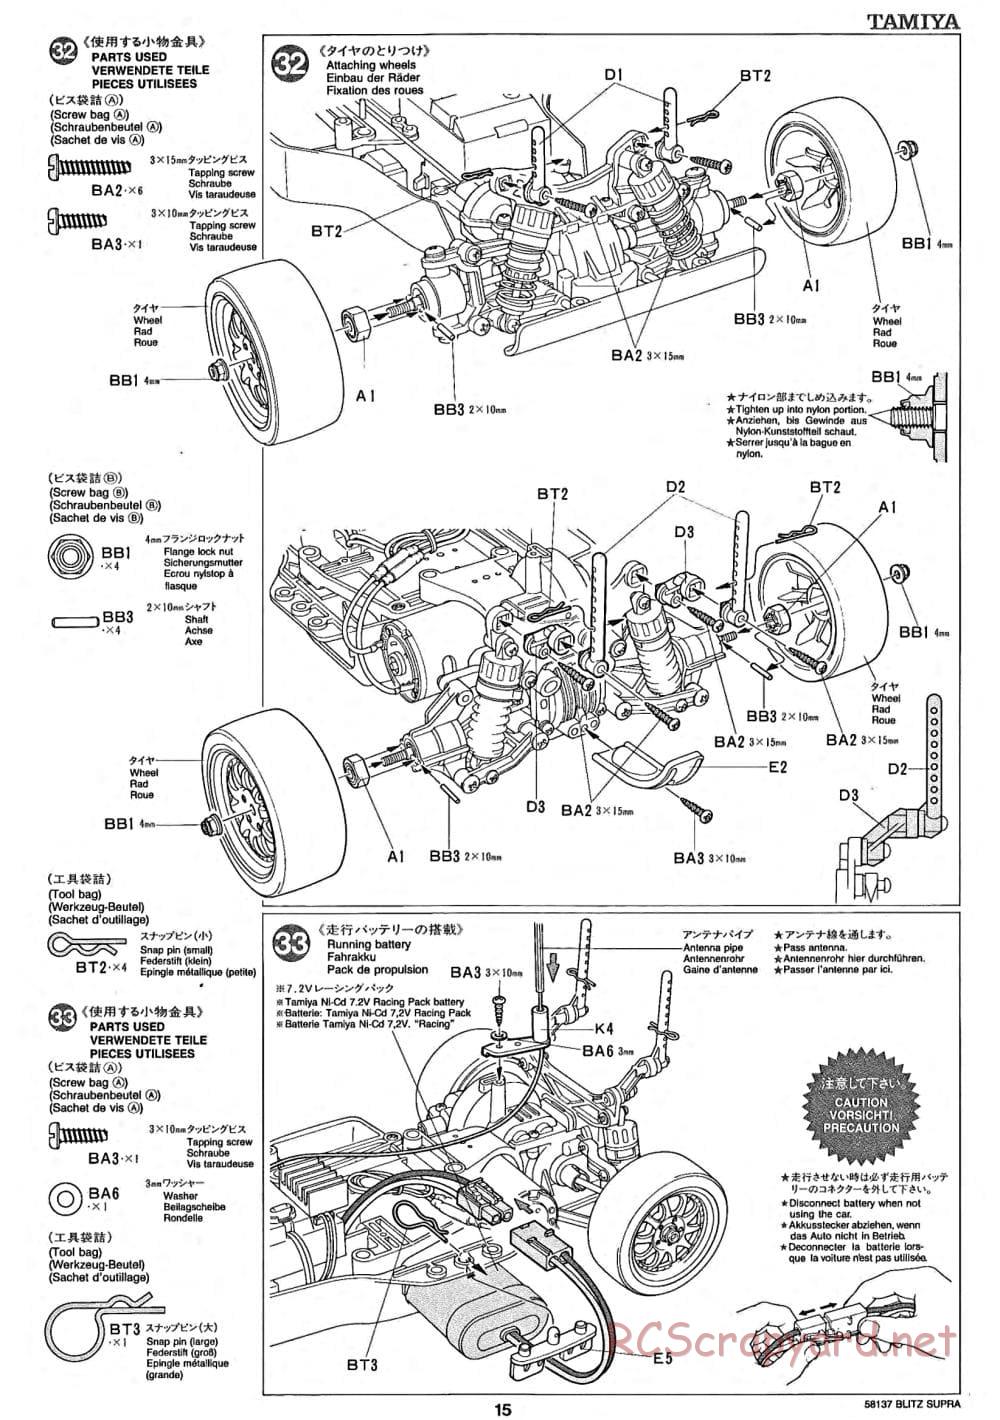 Tamiya - Blitz Toyota Supra Gr.N - TA-02 Chassis - Manual - Page 15